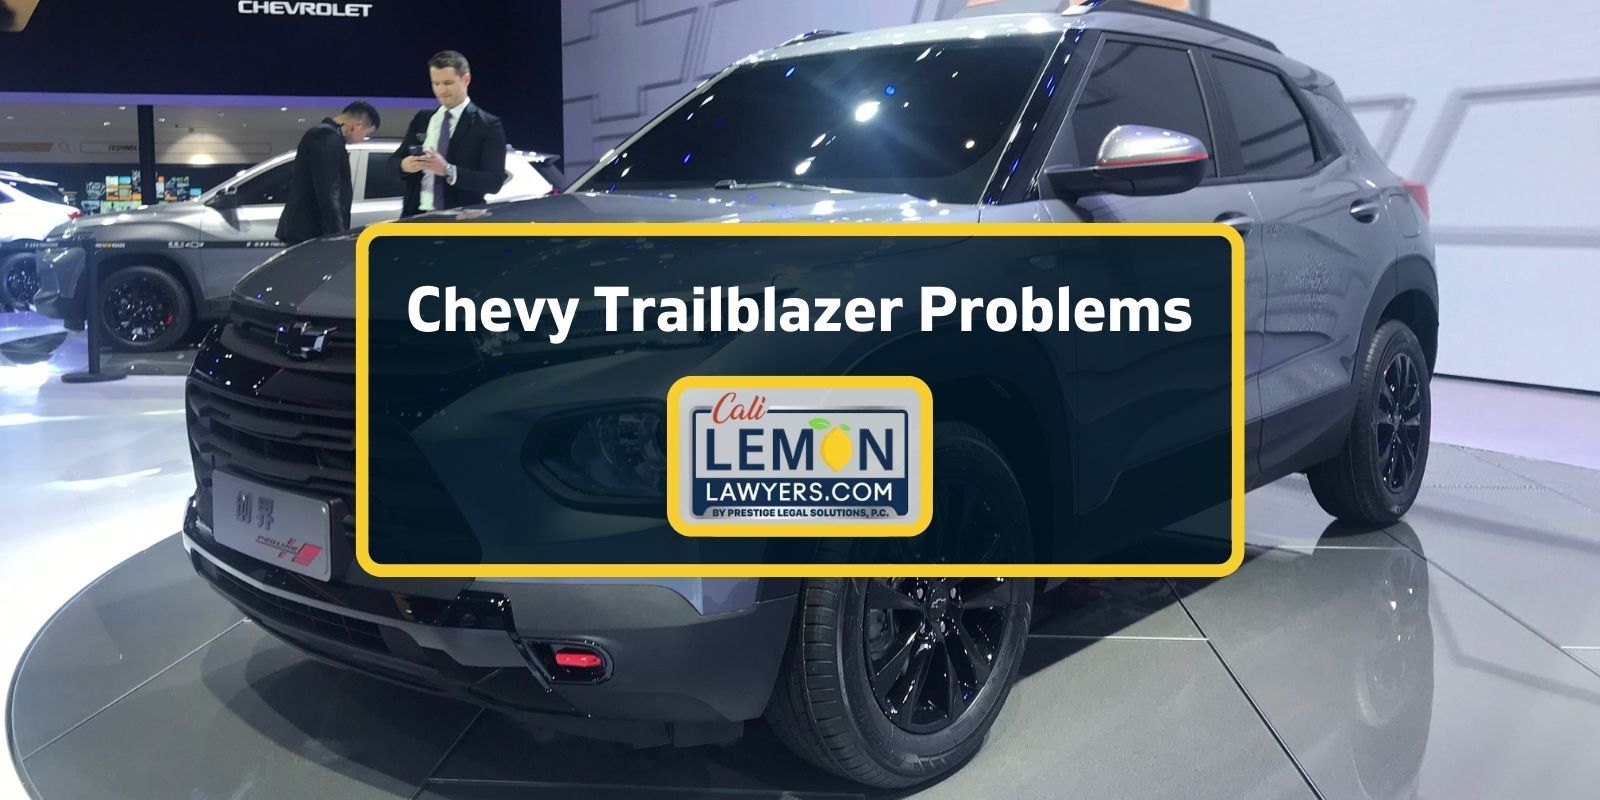 Chevy Trailblazer problems